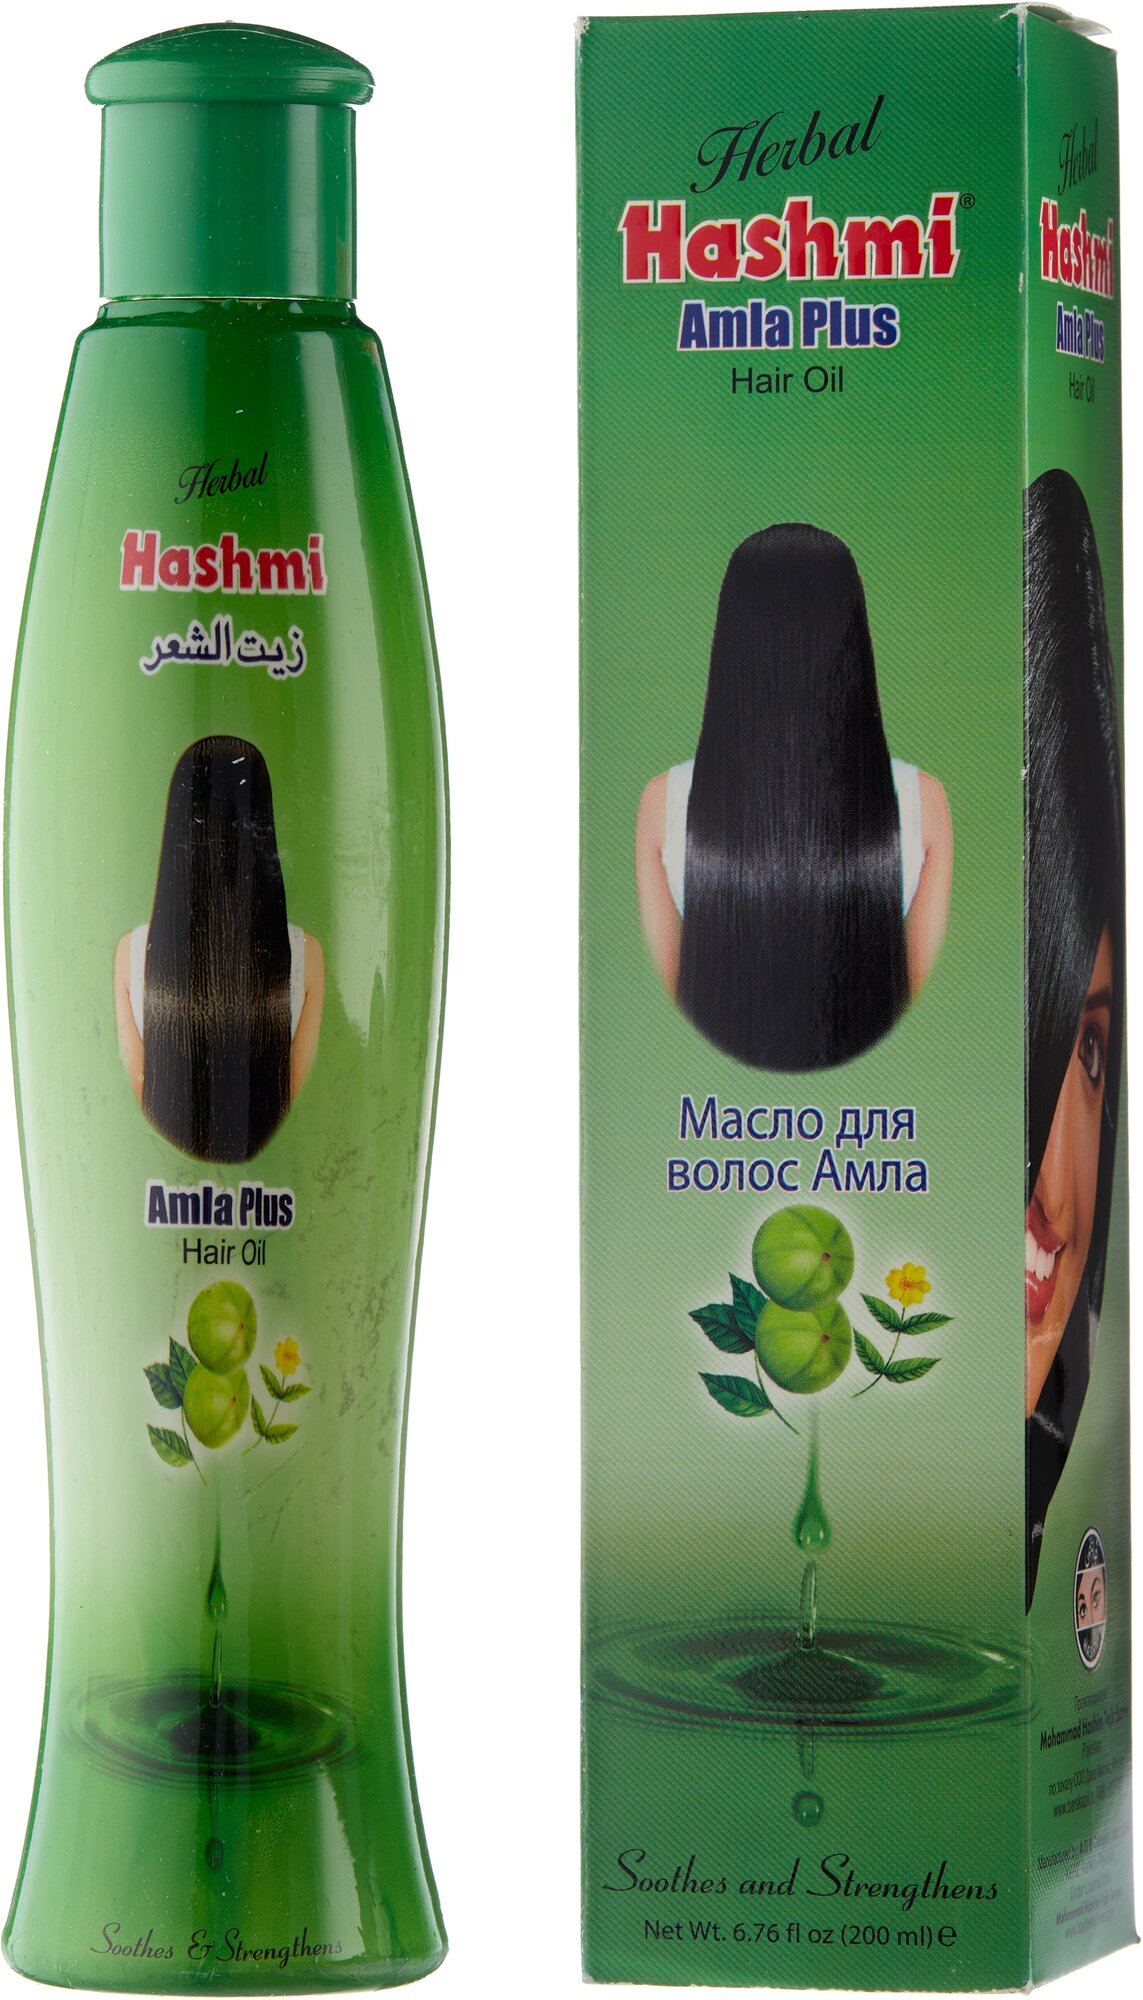 Масло для волос Амла Плюс Amla Plus Hair Oil Hashmi 200 мл.